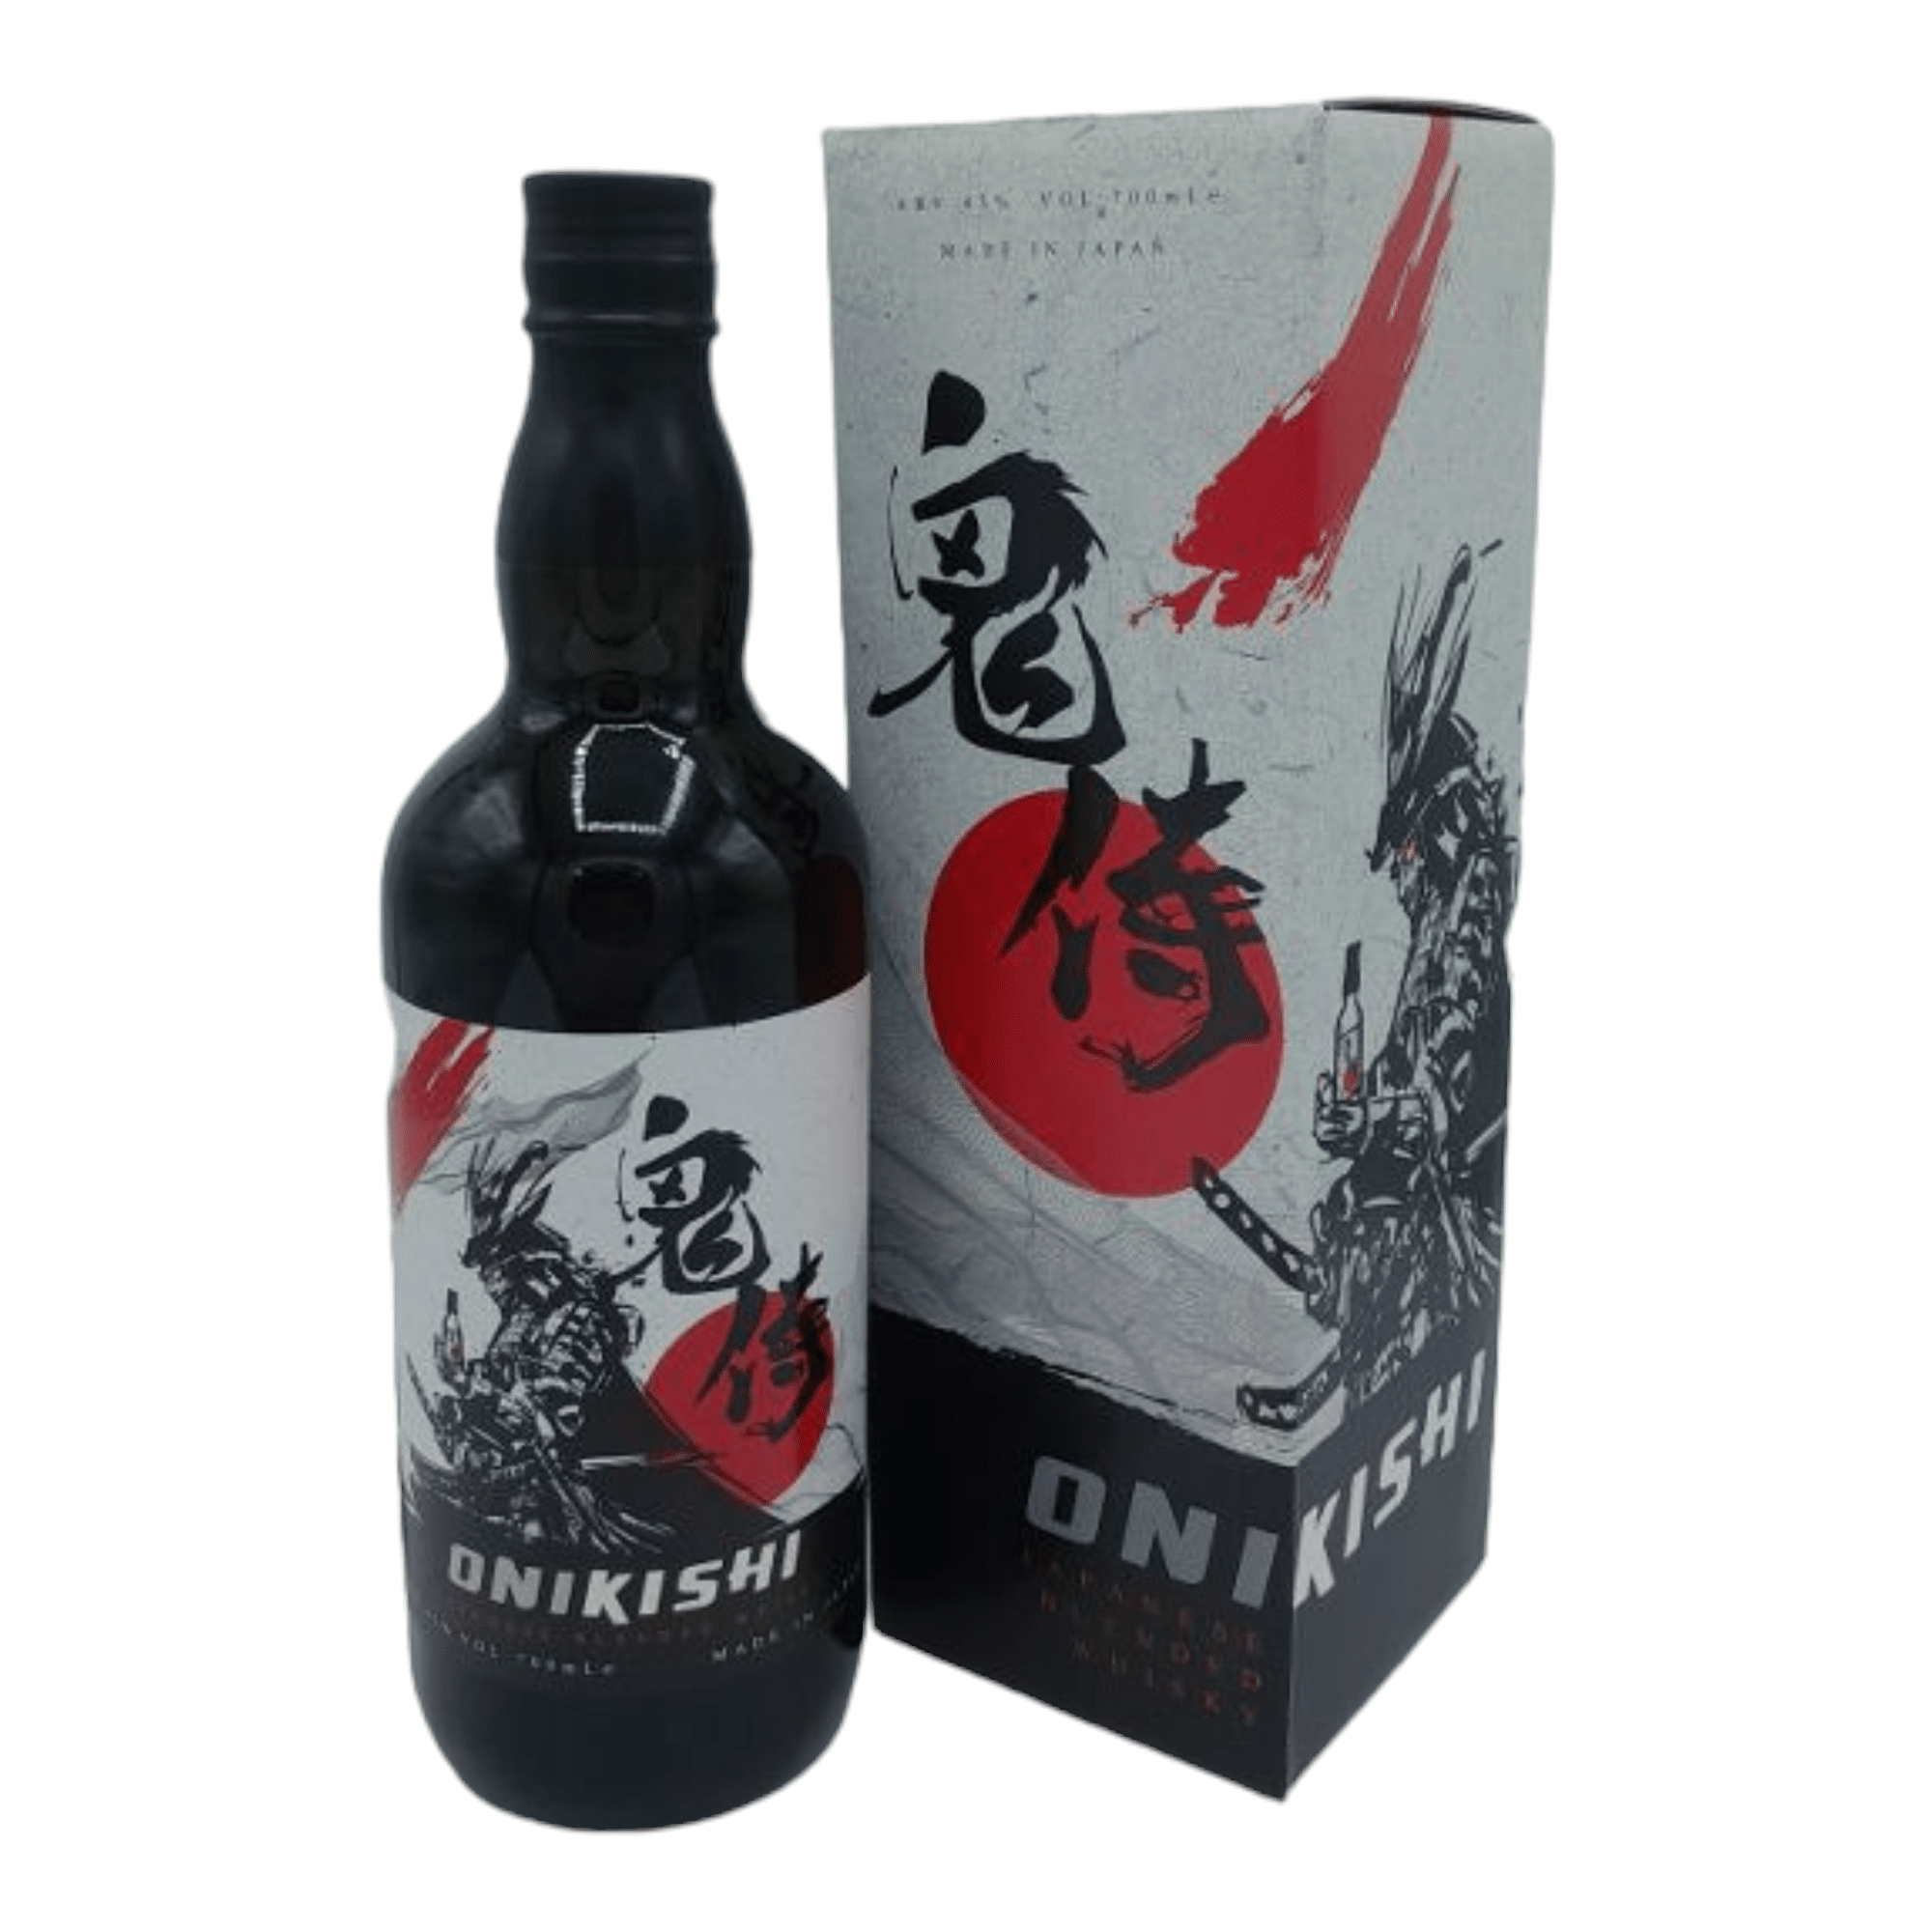 וויסקי יפני אוניקישי – Onikishi